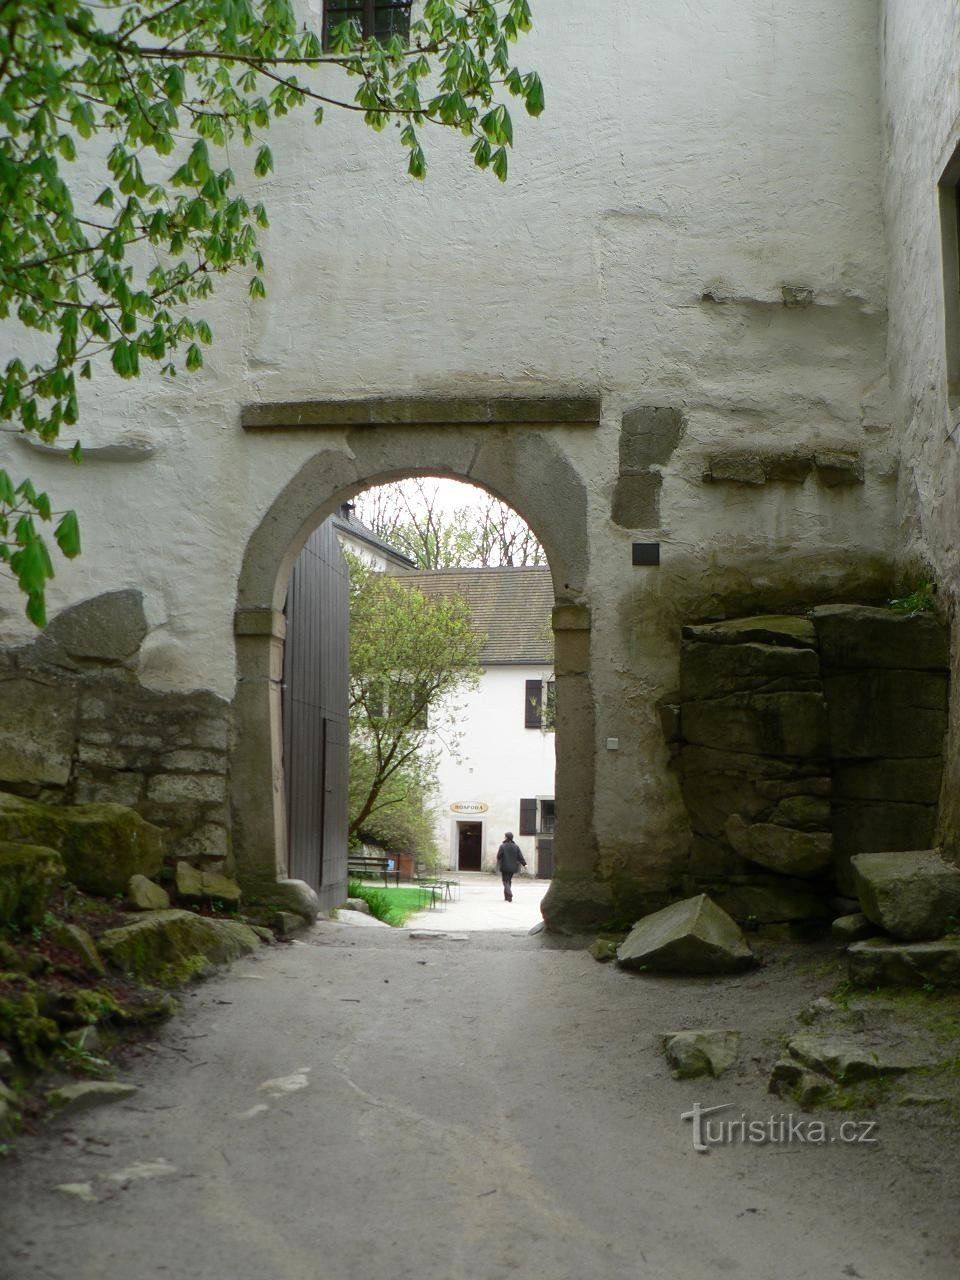 Roštejn, the entrance gate of the castle